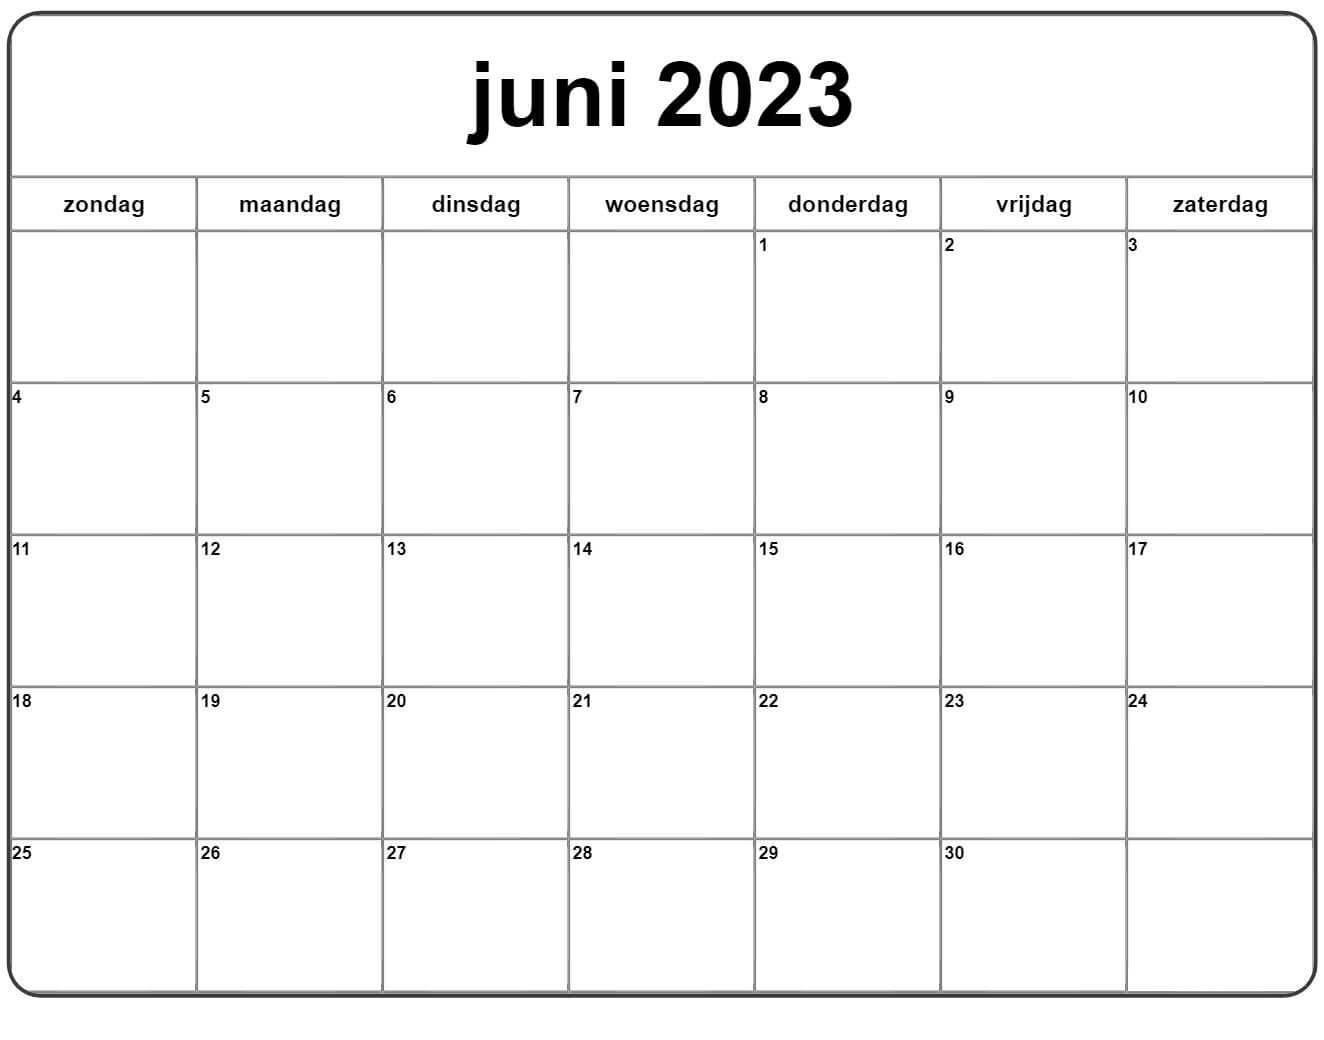 Kalender Juni 2023